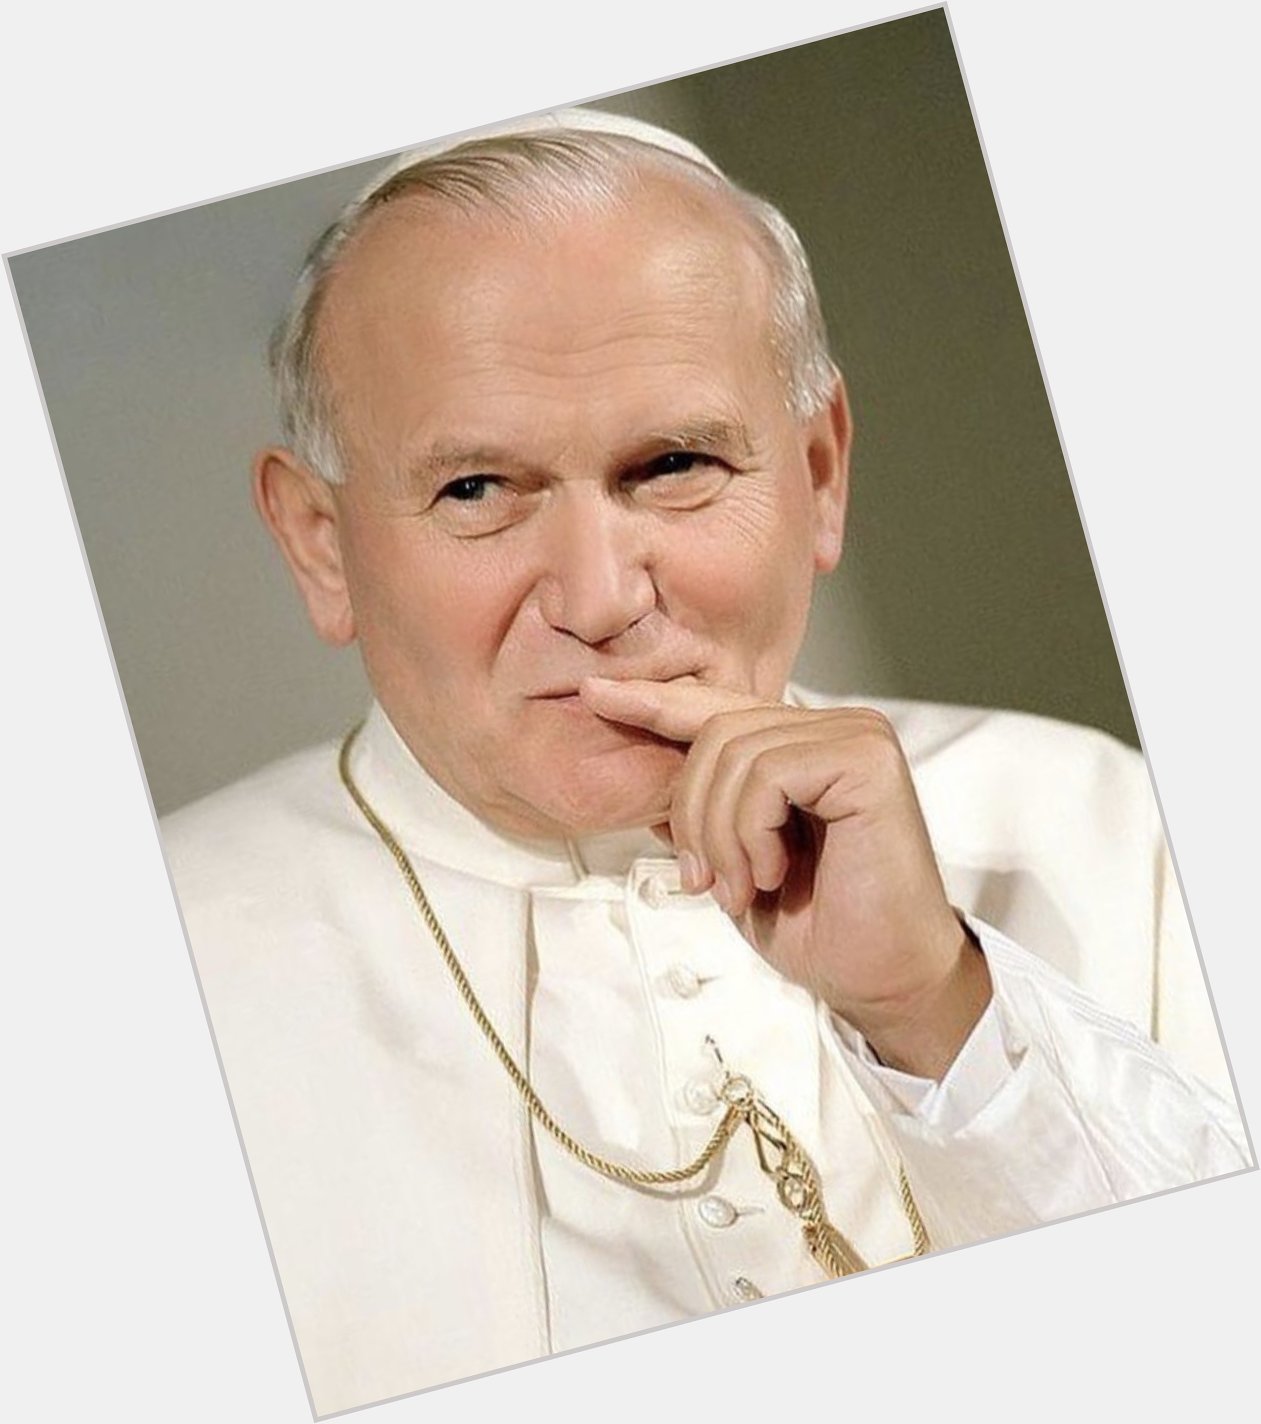 Happy 101 birthday St. John Paul II 